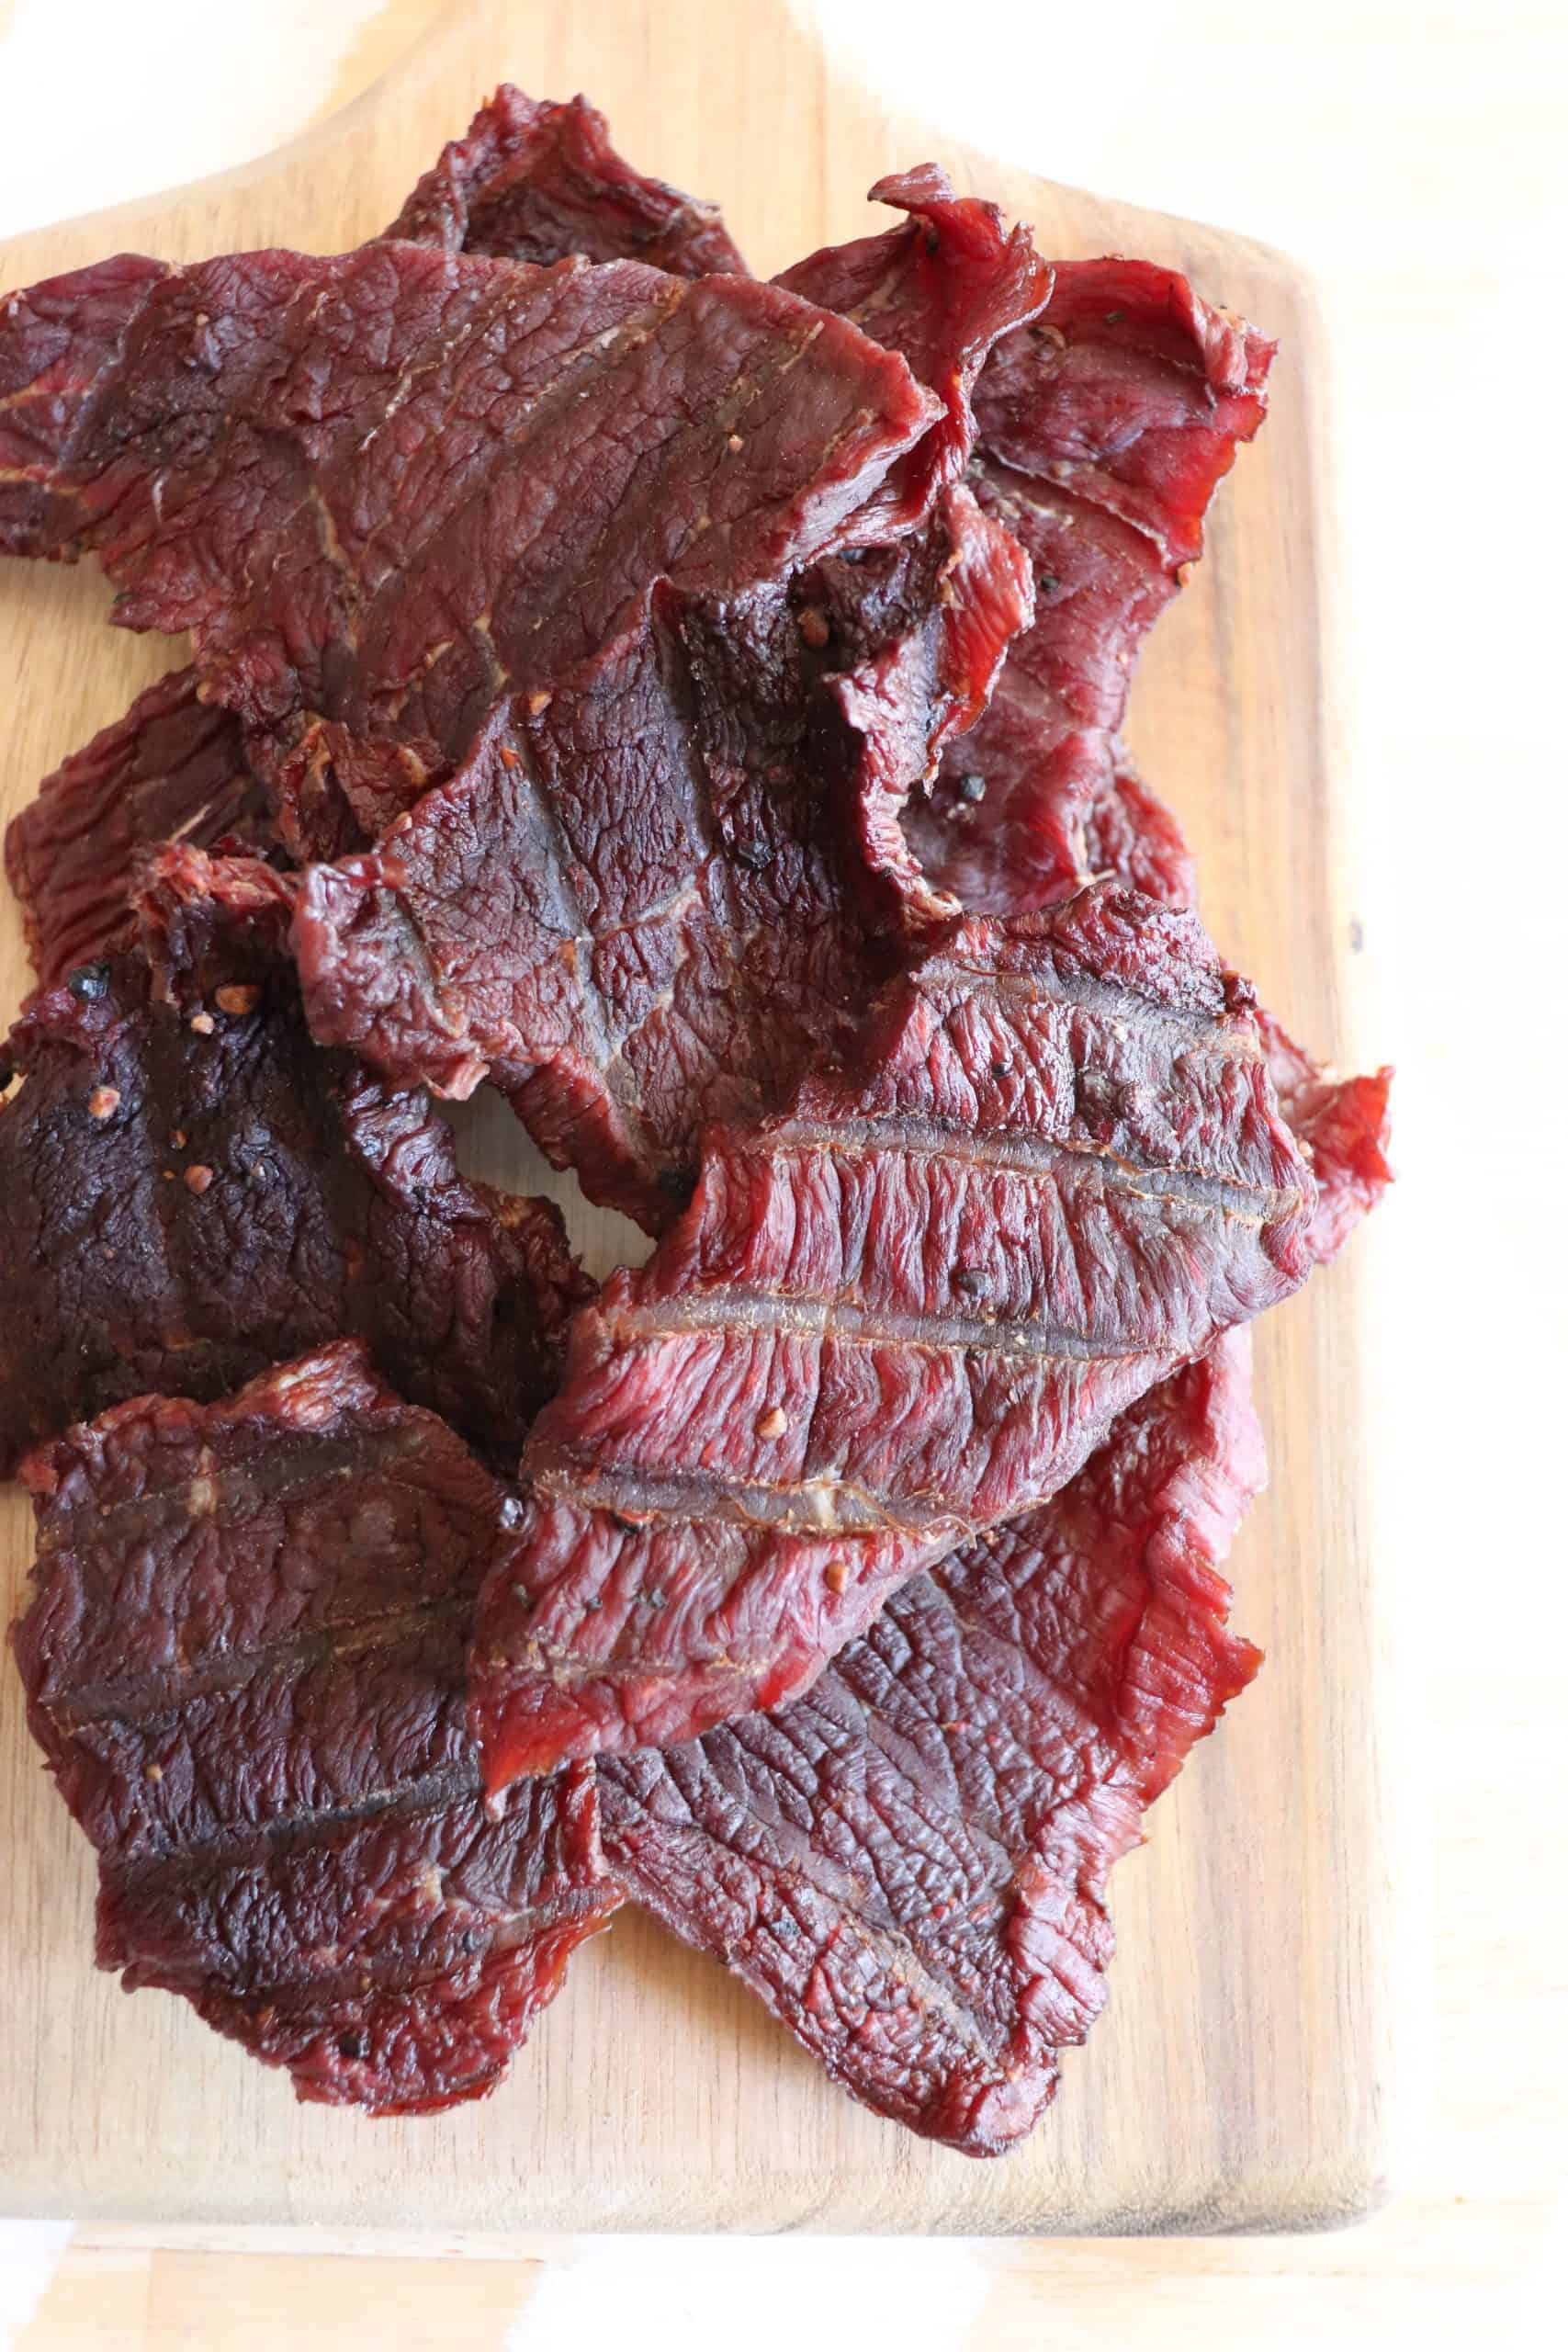 Carnivore Diet Homemade Beef Jerky